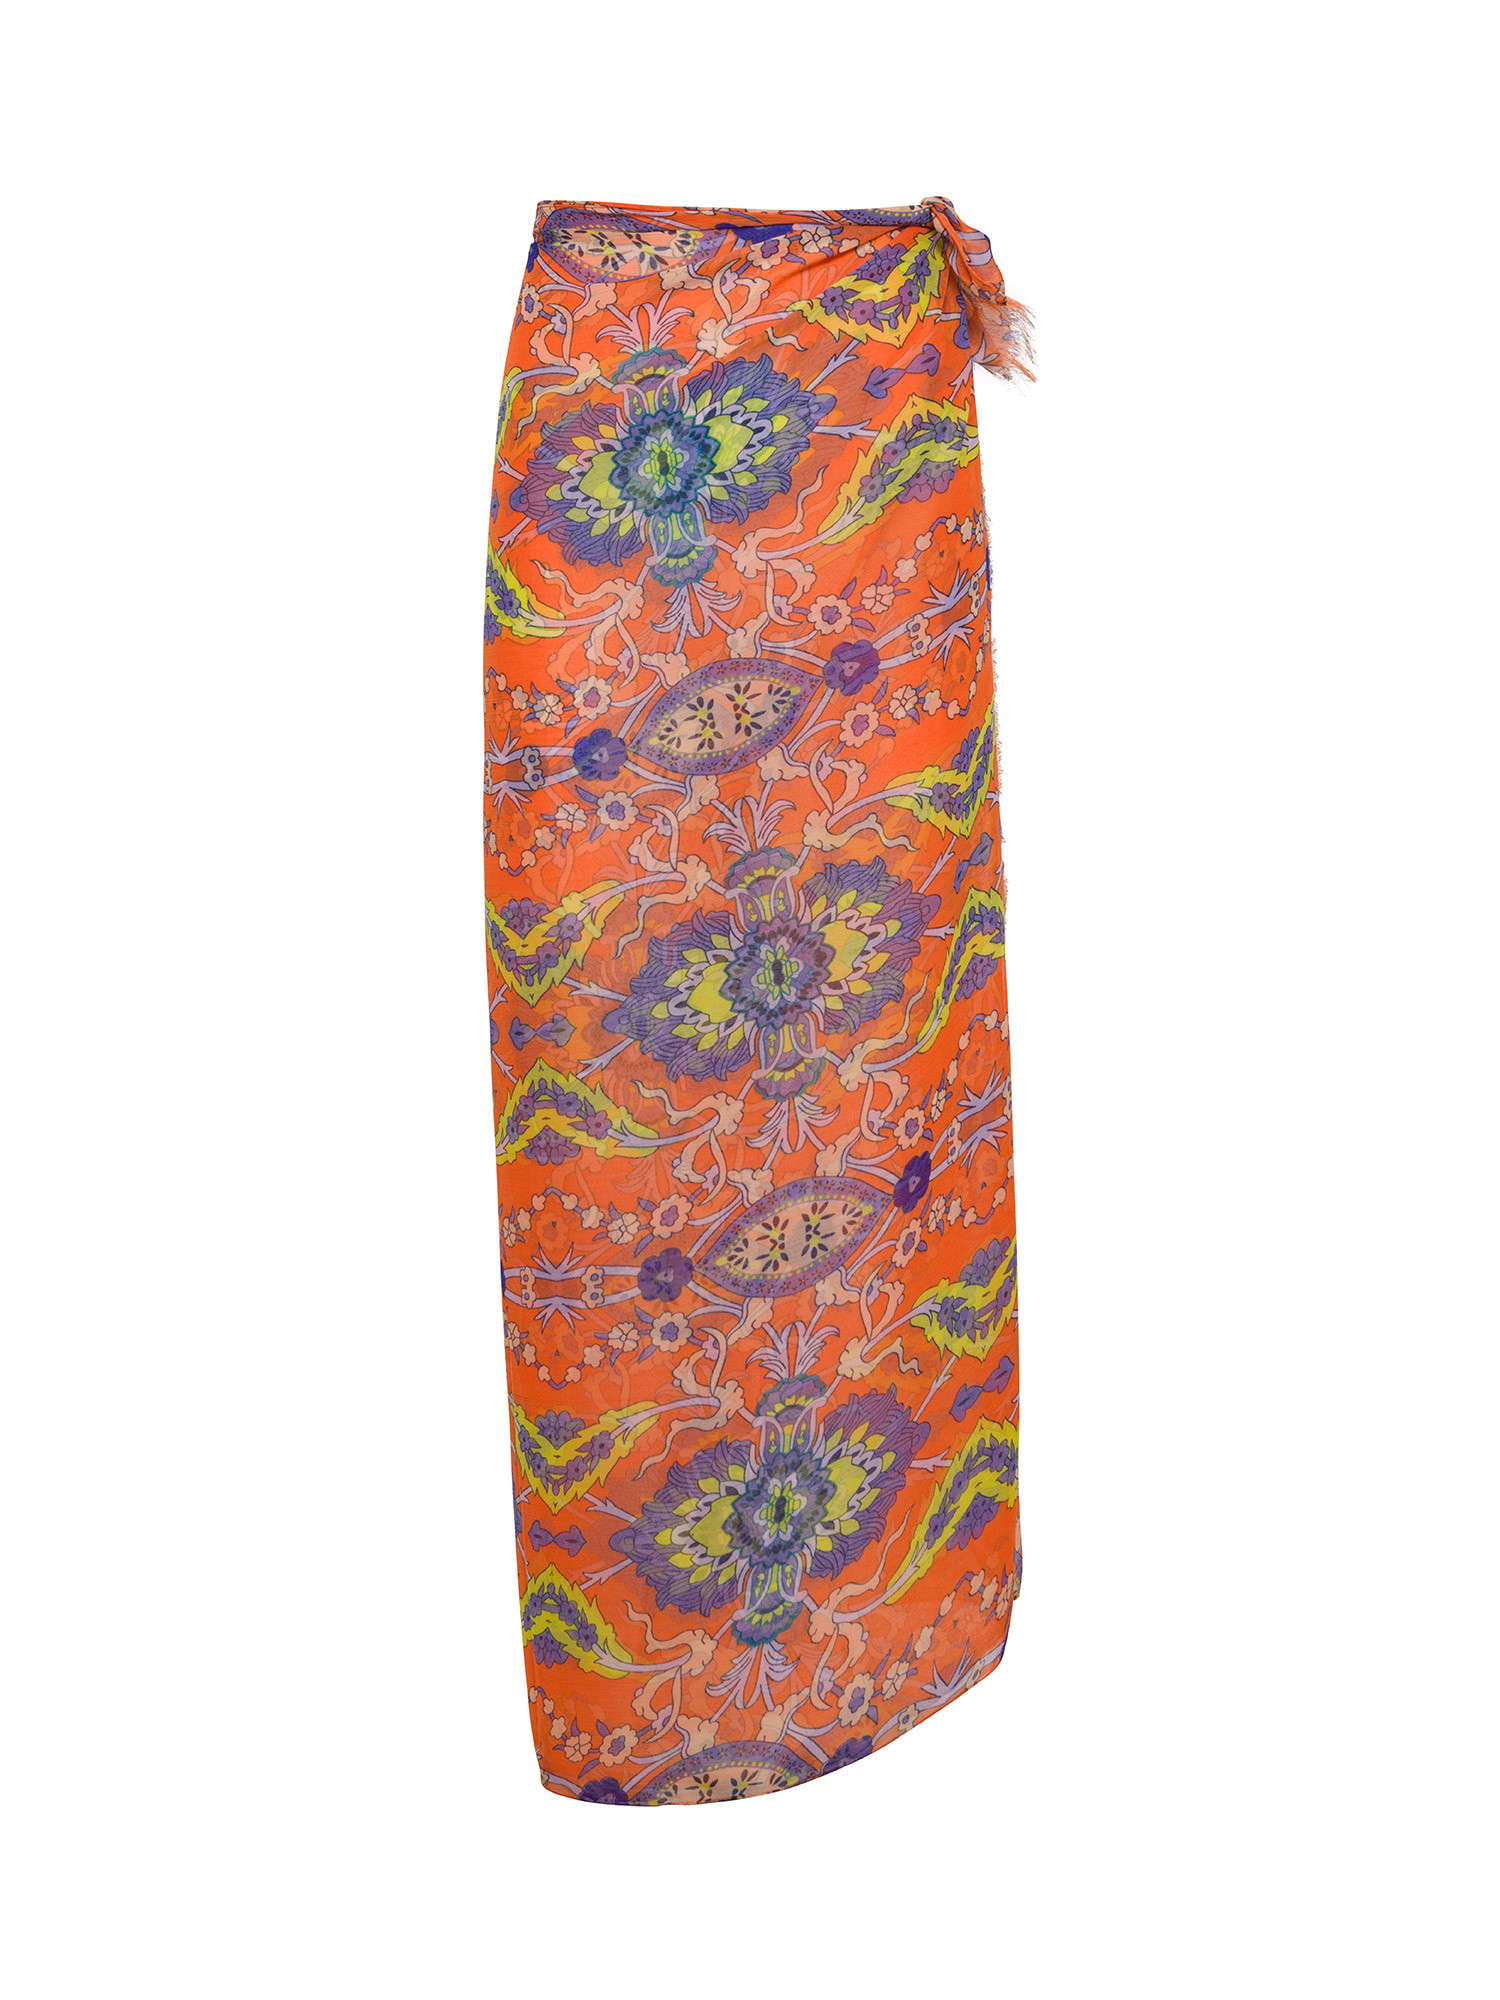 Koan - Sarong with floral print, Orange, large image number 0